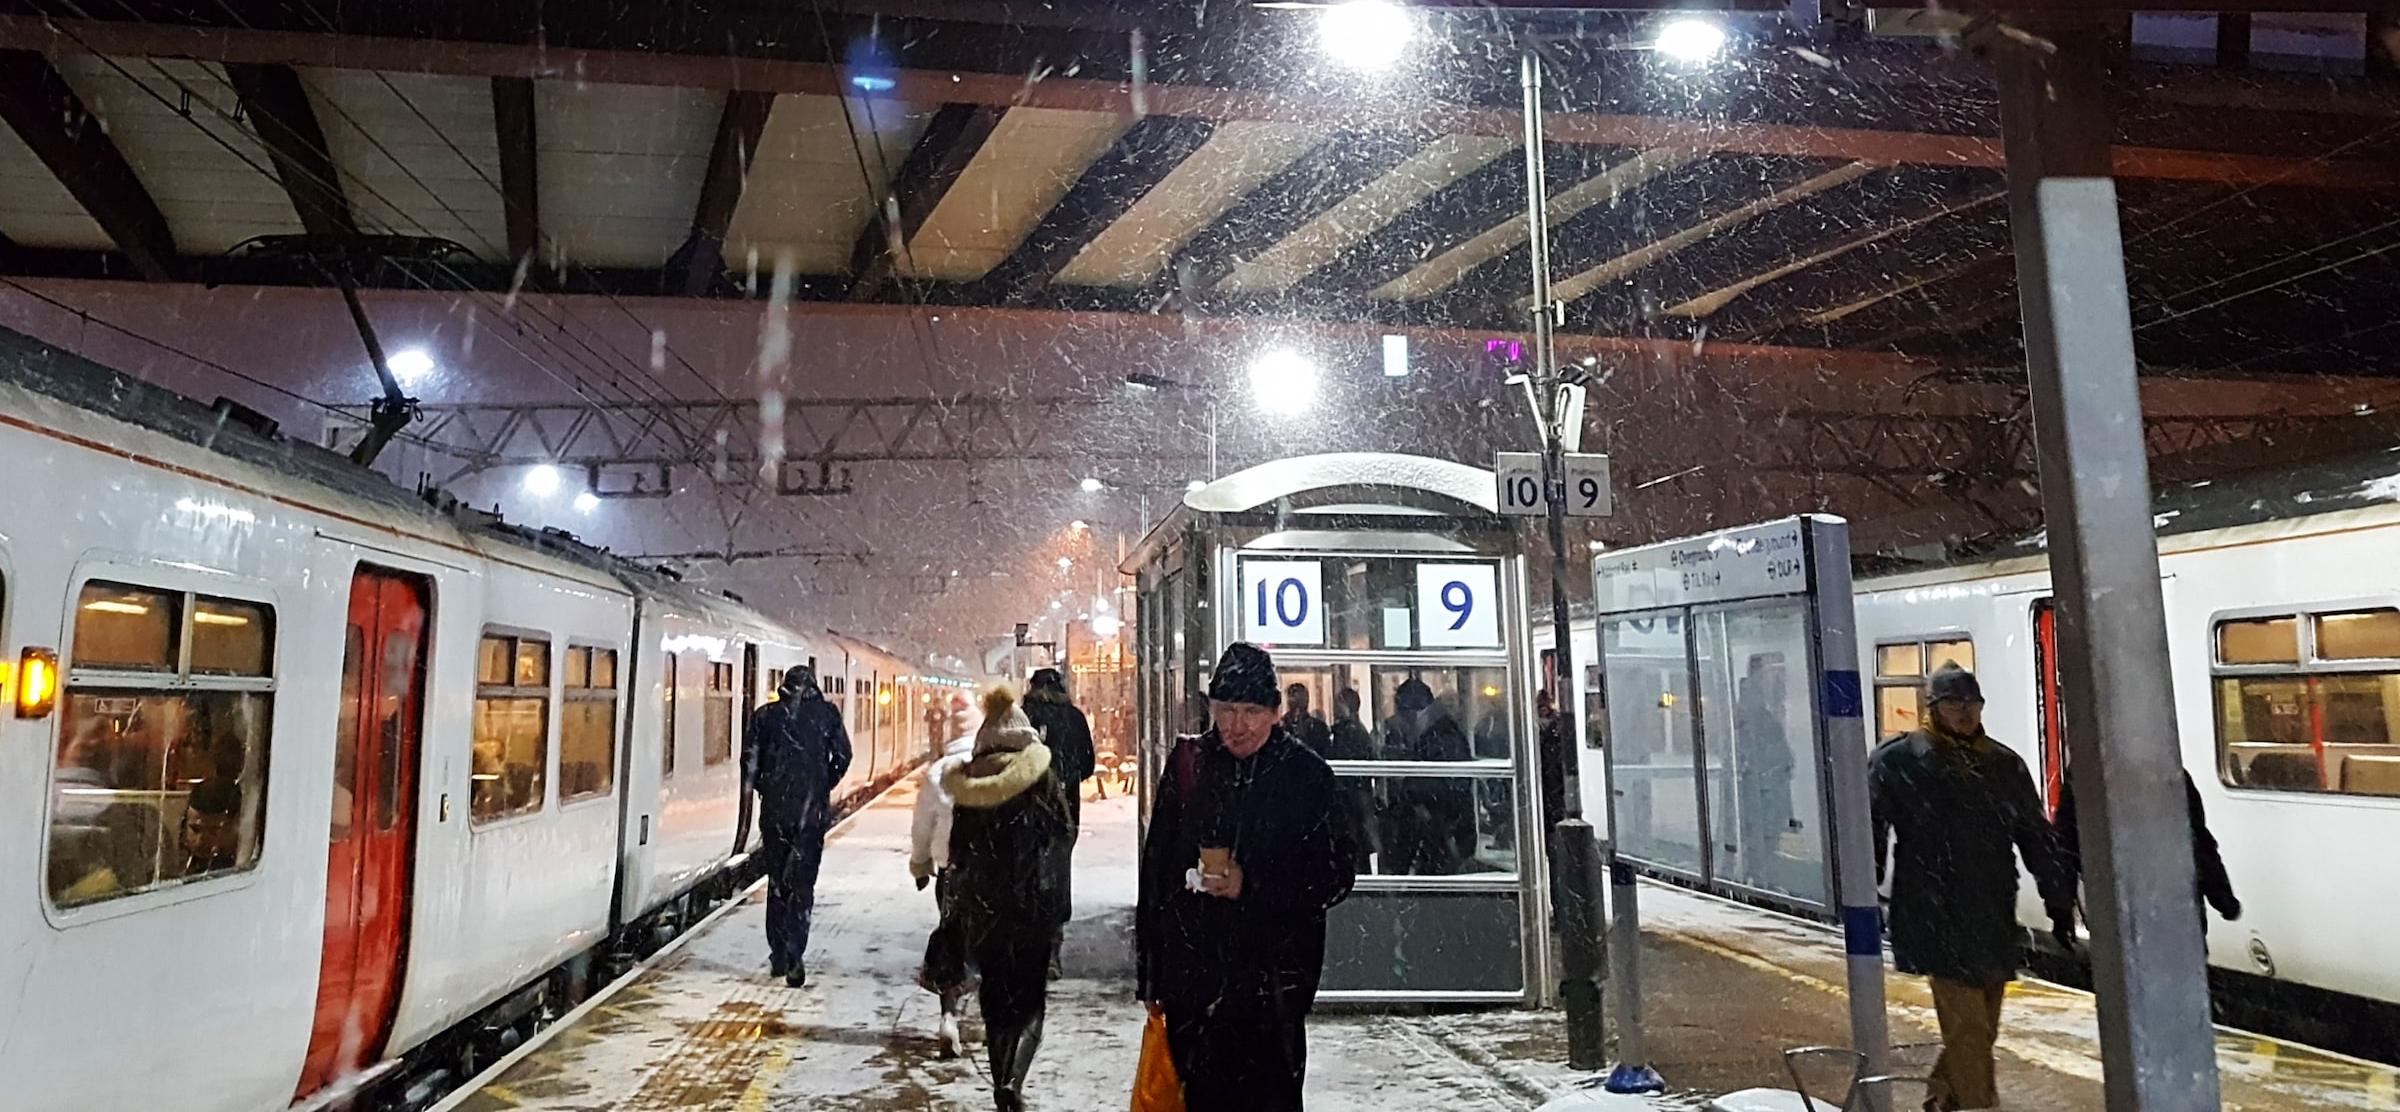 Passengers on a snowy rail station platform